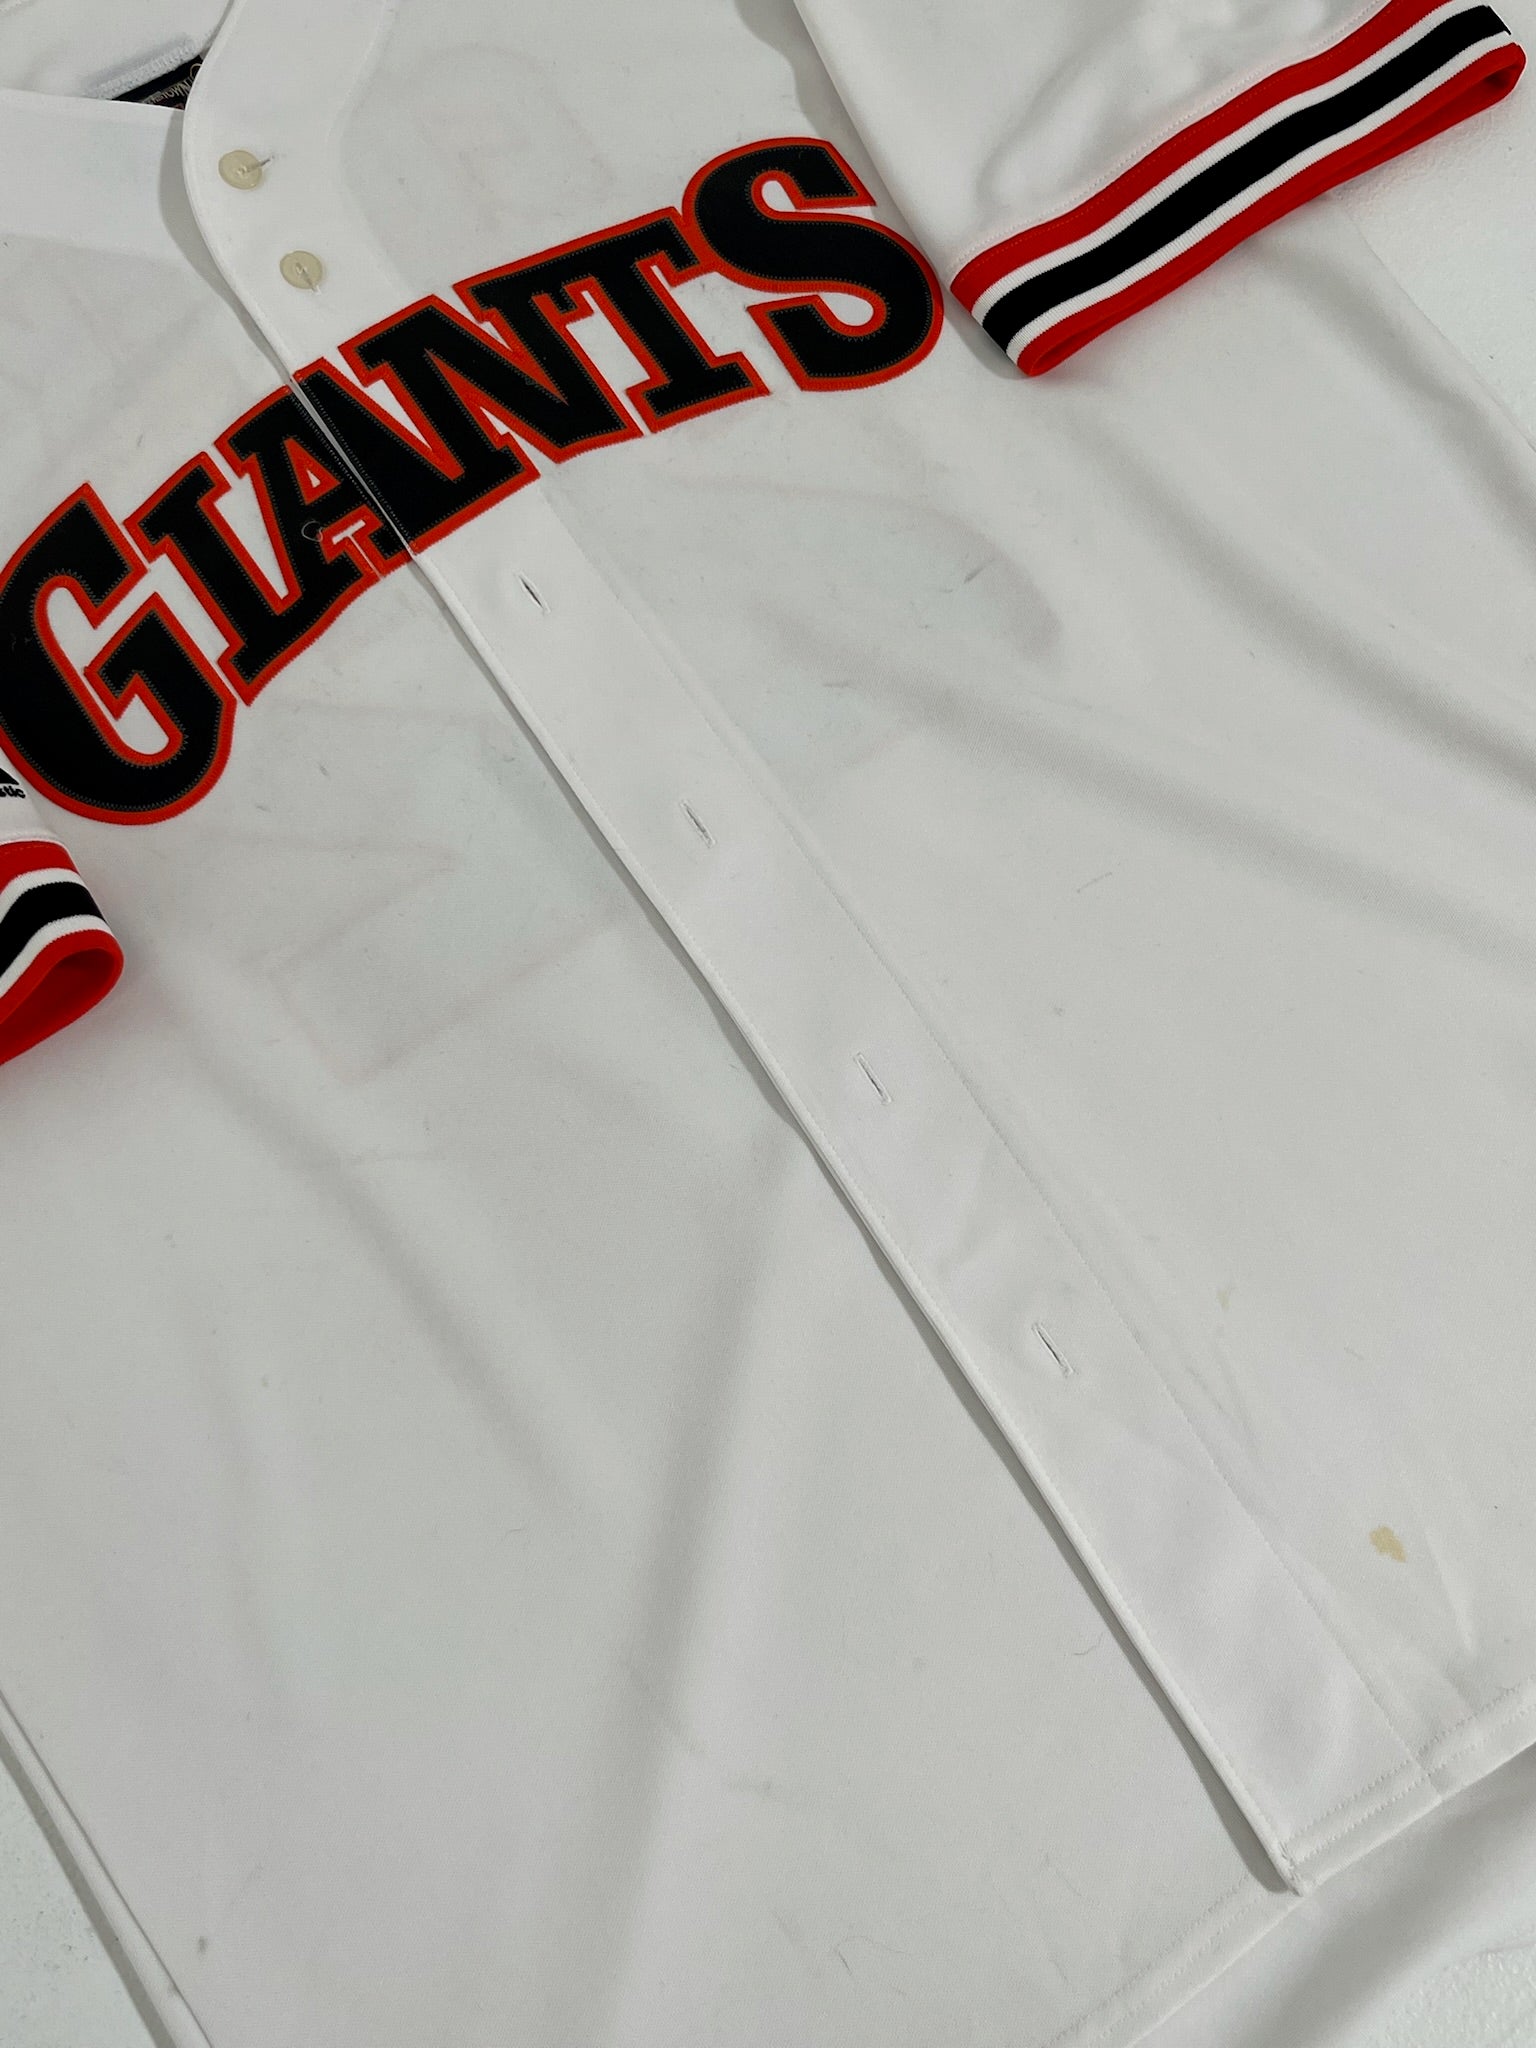 San Francisco Giants Throwback Apparel & Jerseys